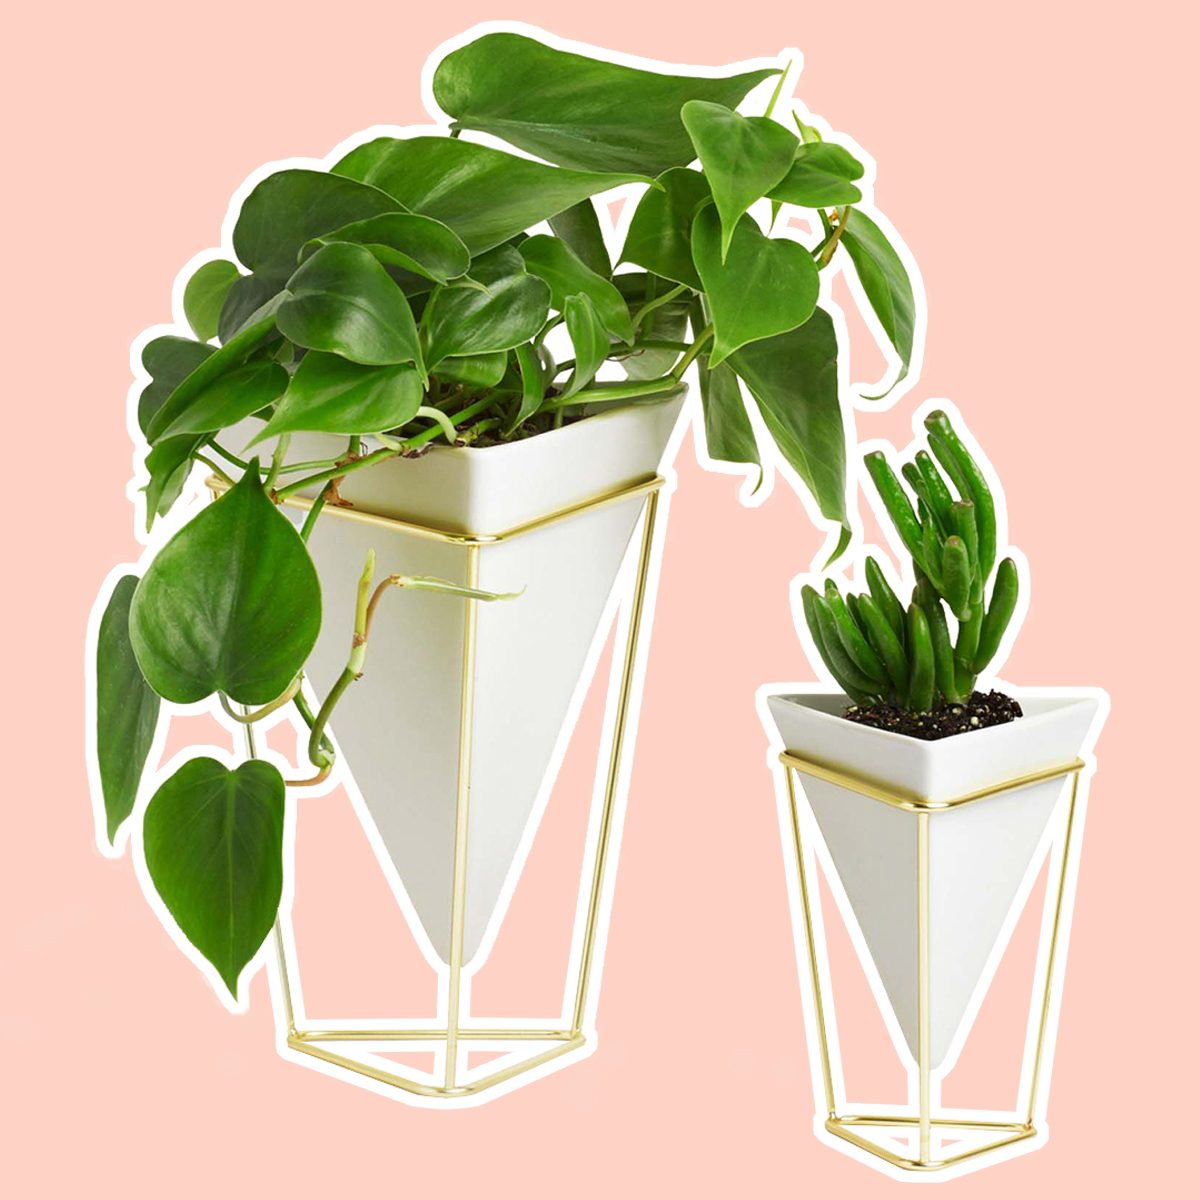 Umbra Trigg Desktop Planter Vase & Geometric Container - Great For Succulent Plants, Air Plant, Mini Cactus, Faux Plants and More, White Ceramic/Brass (Set of 2)